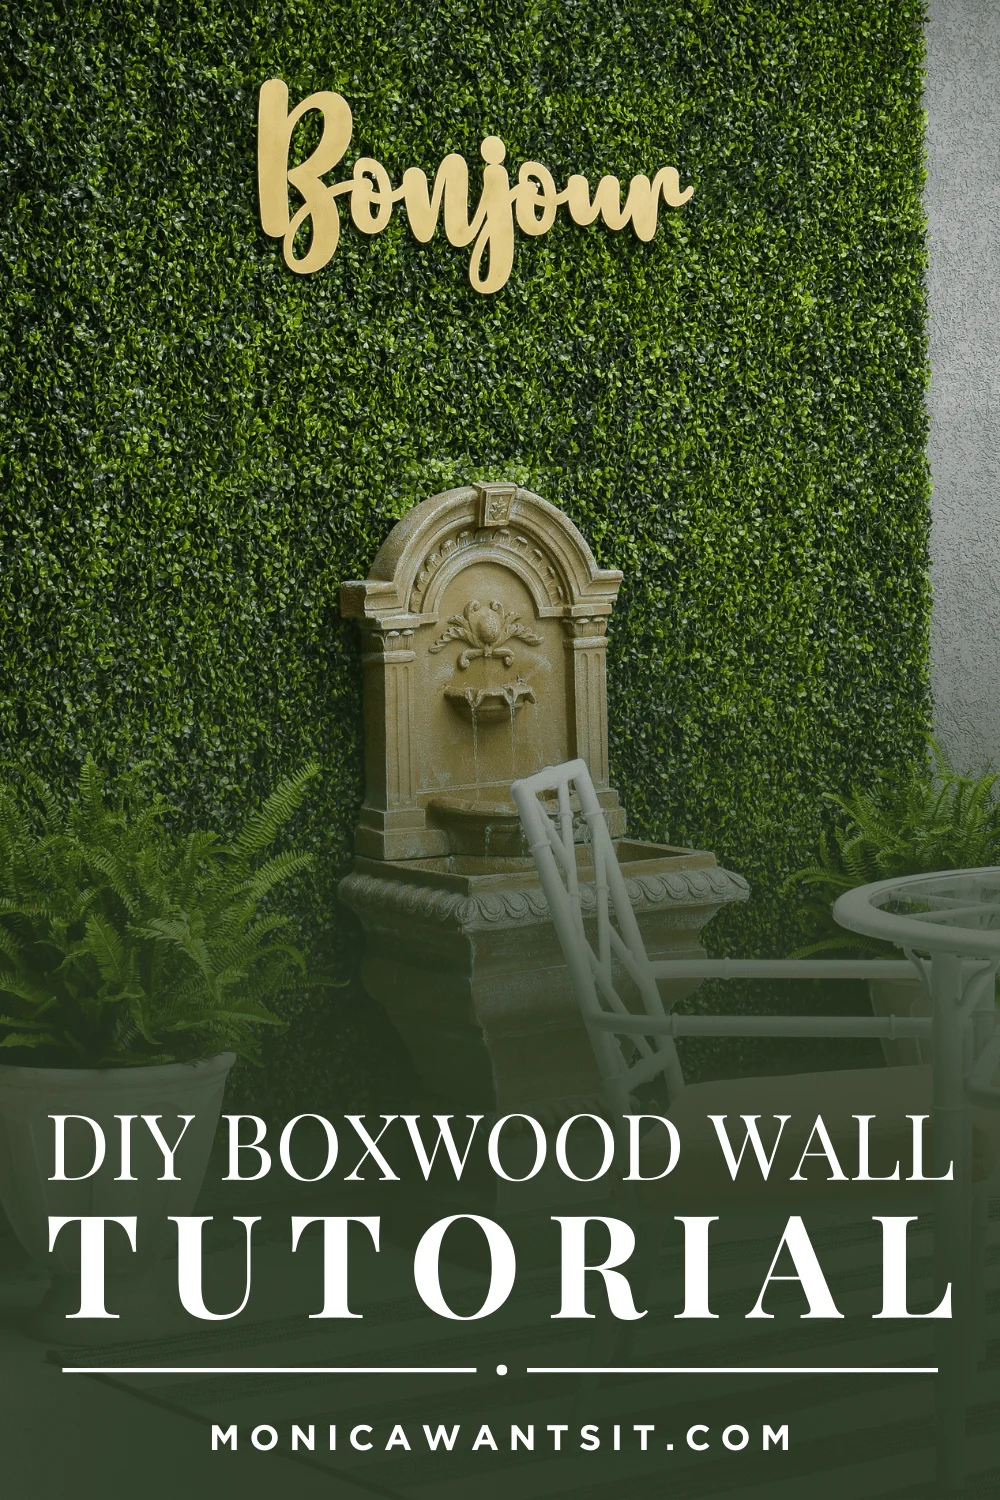 DIY faux boxwood wall tutorial for stucco, brick and masonry